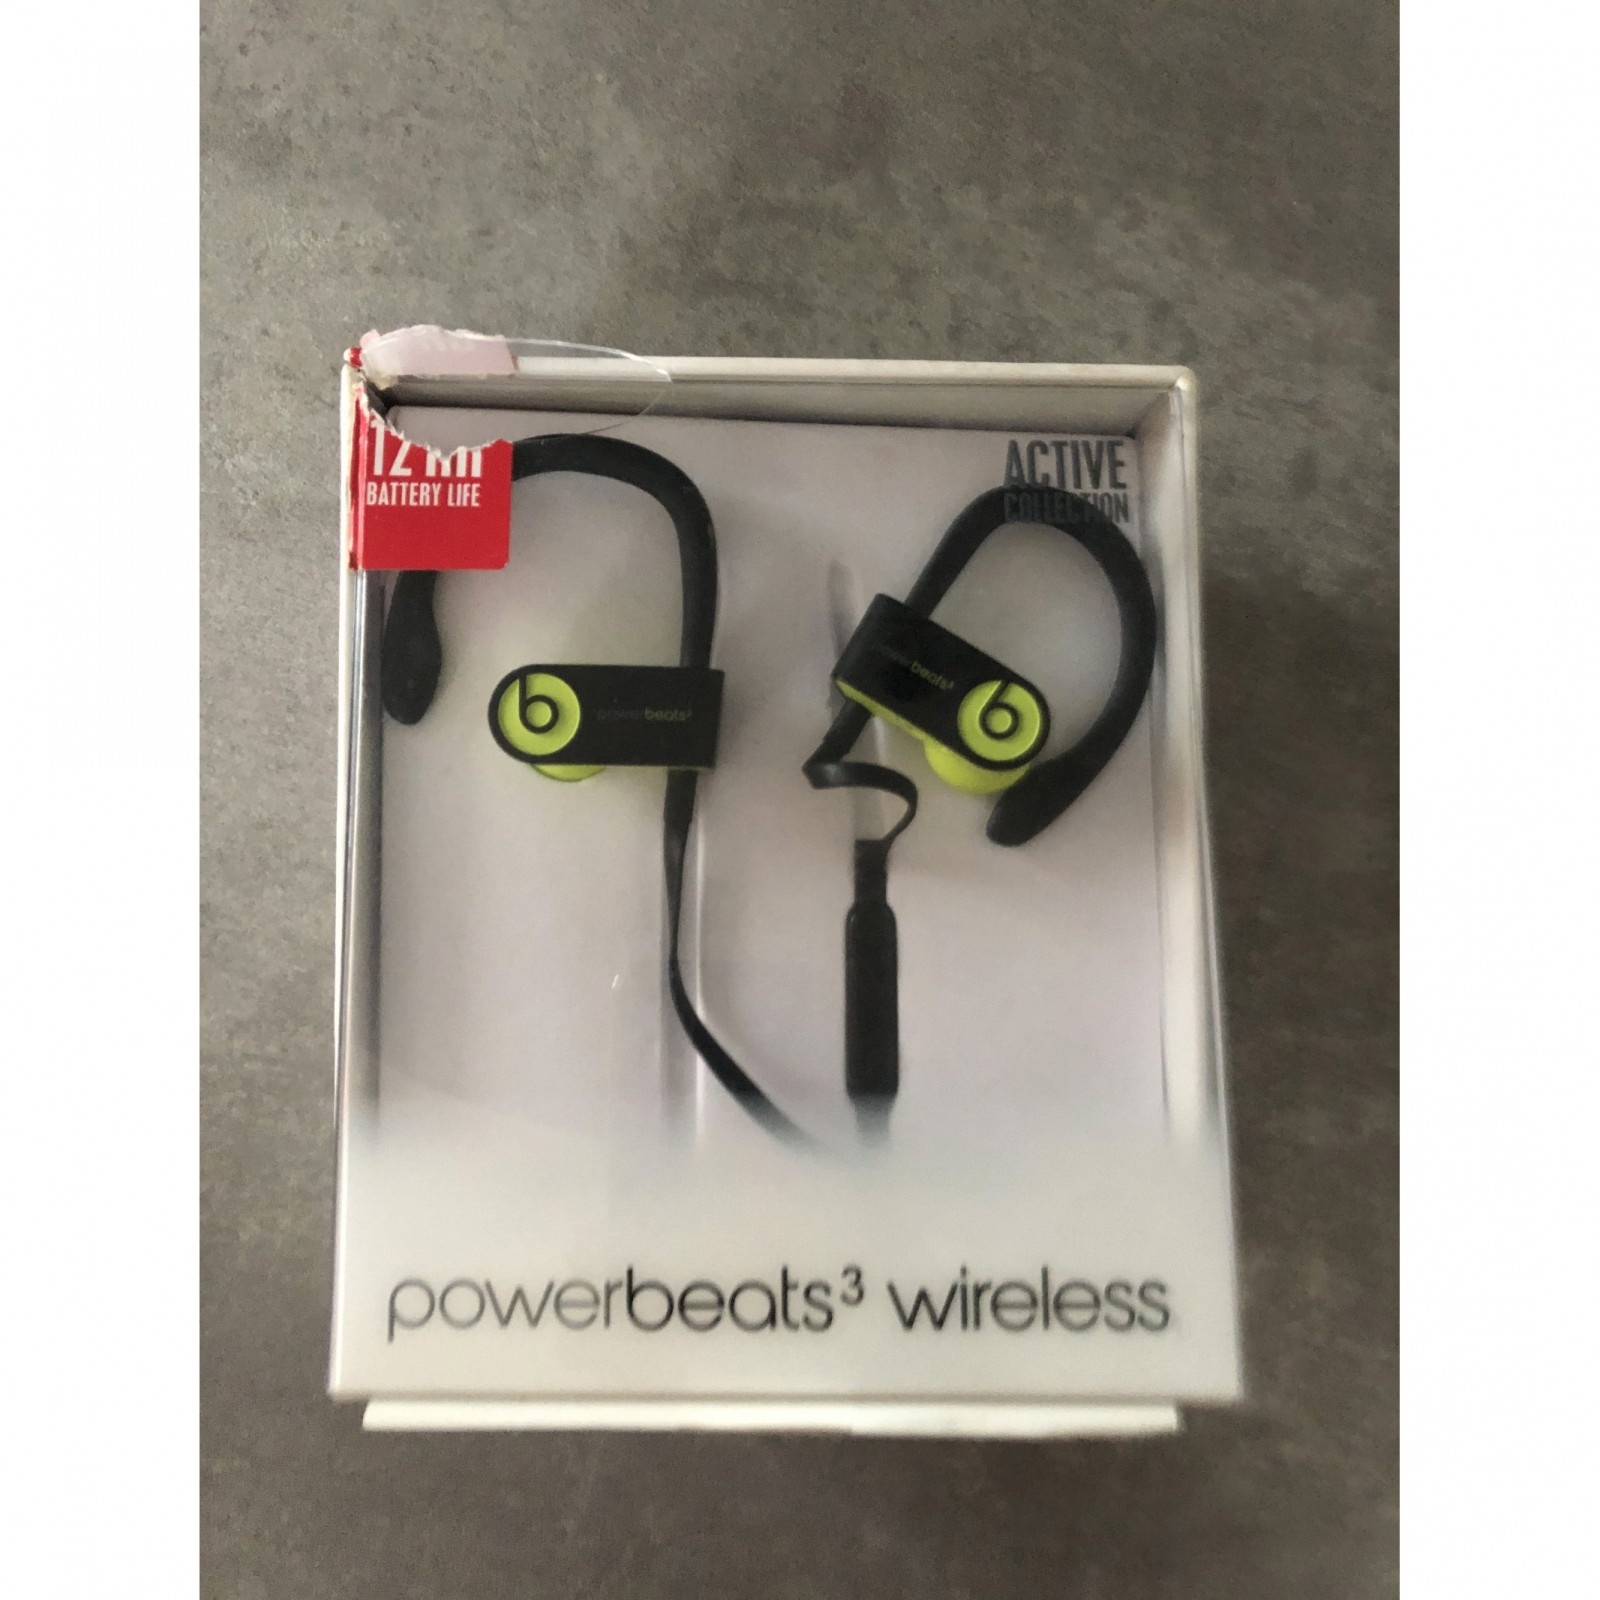 Beats Powerbeats 3 Wireless